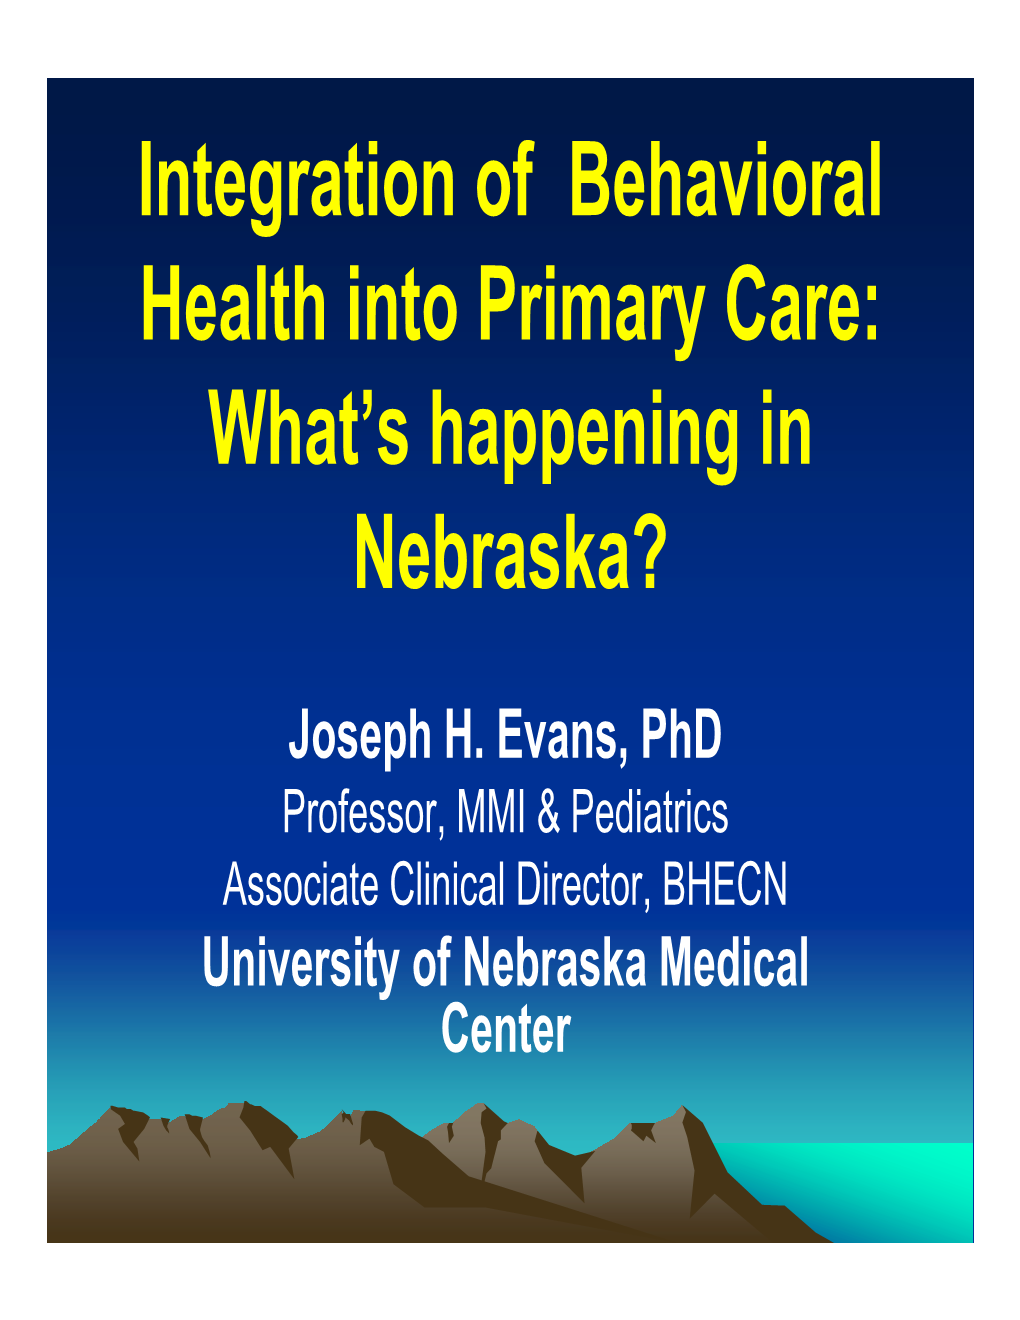 Integration of Behavioral Health Into Primary Care: What's Happening in Nebraska?